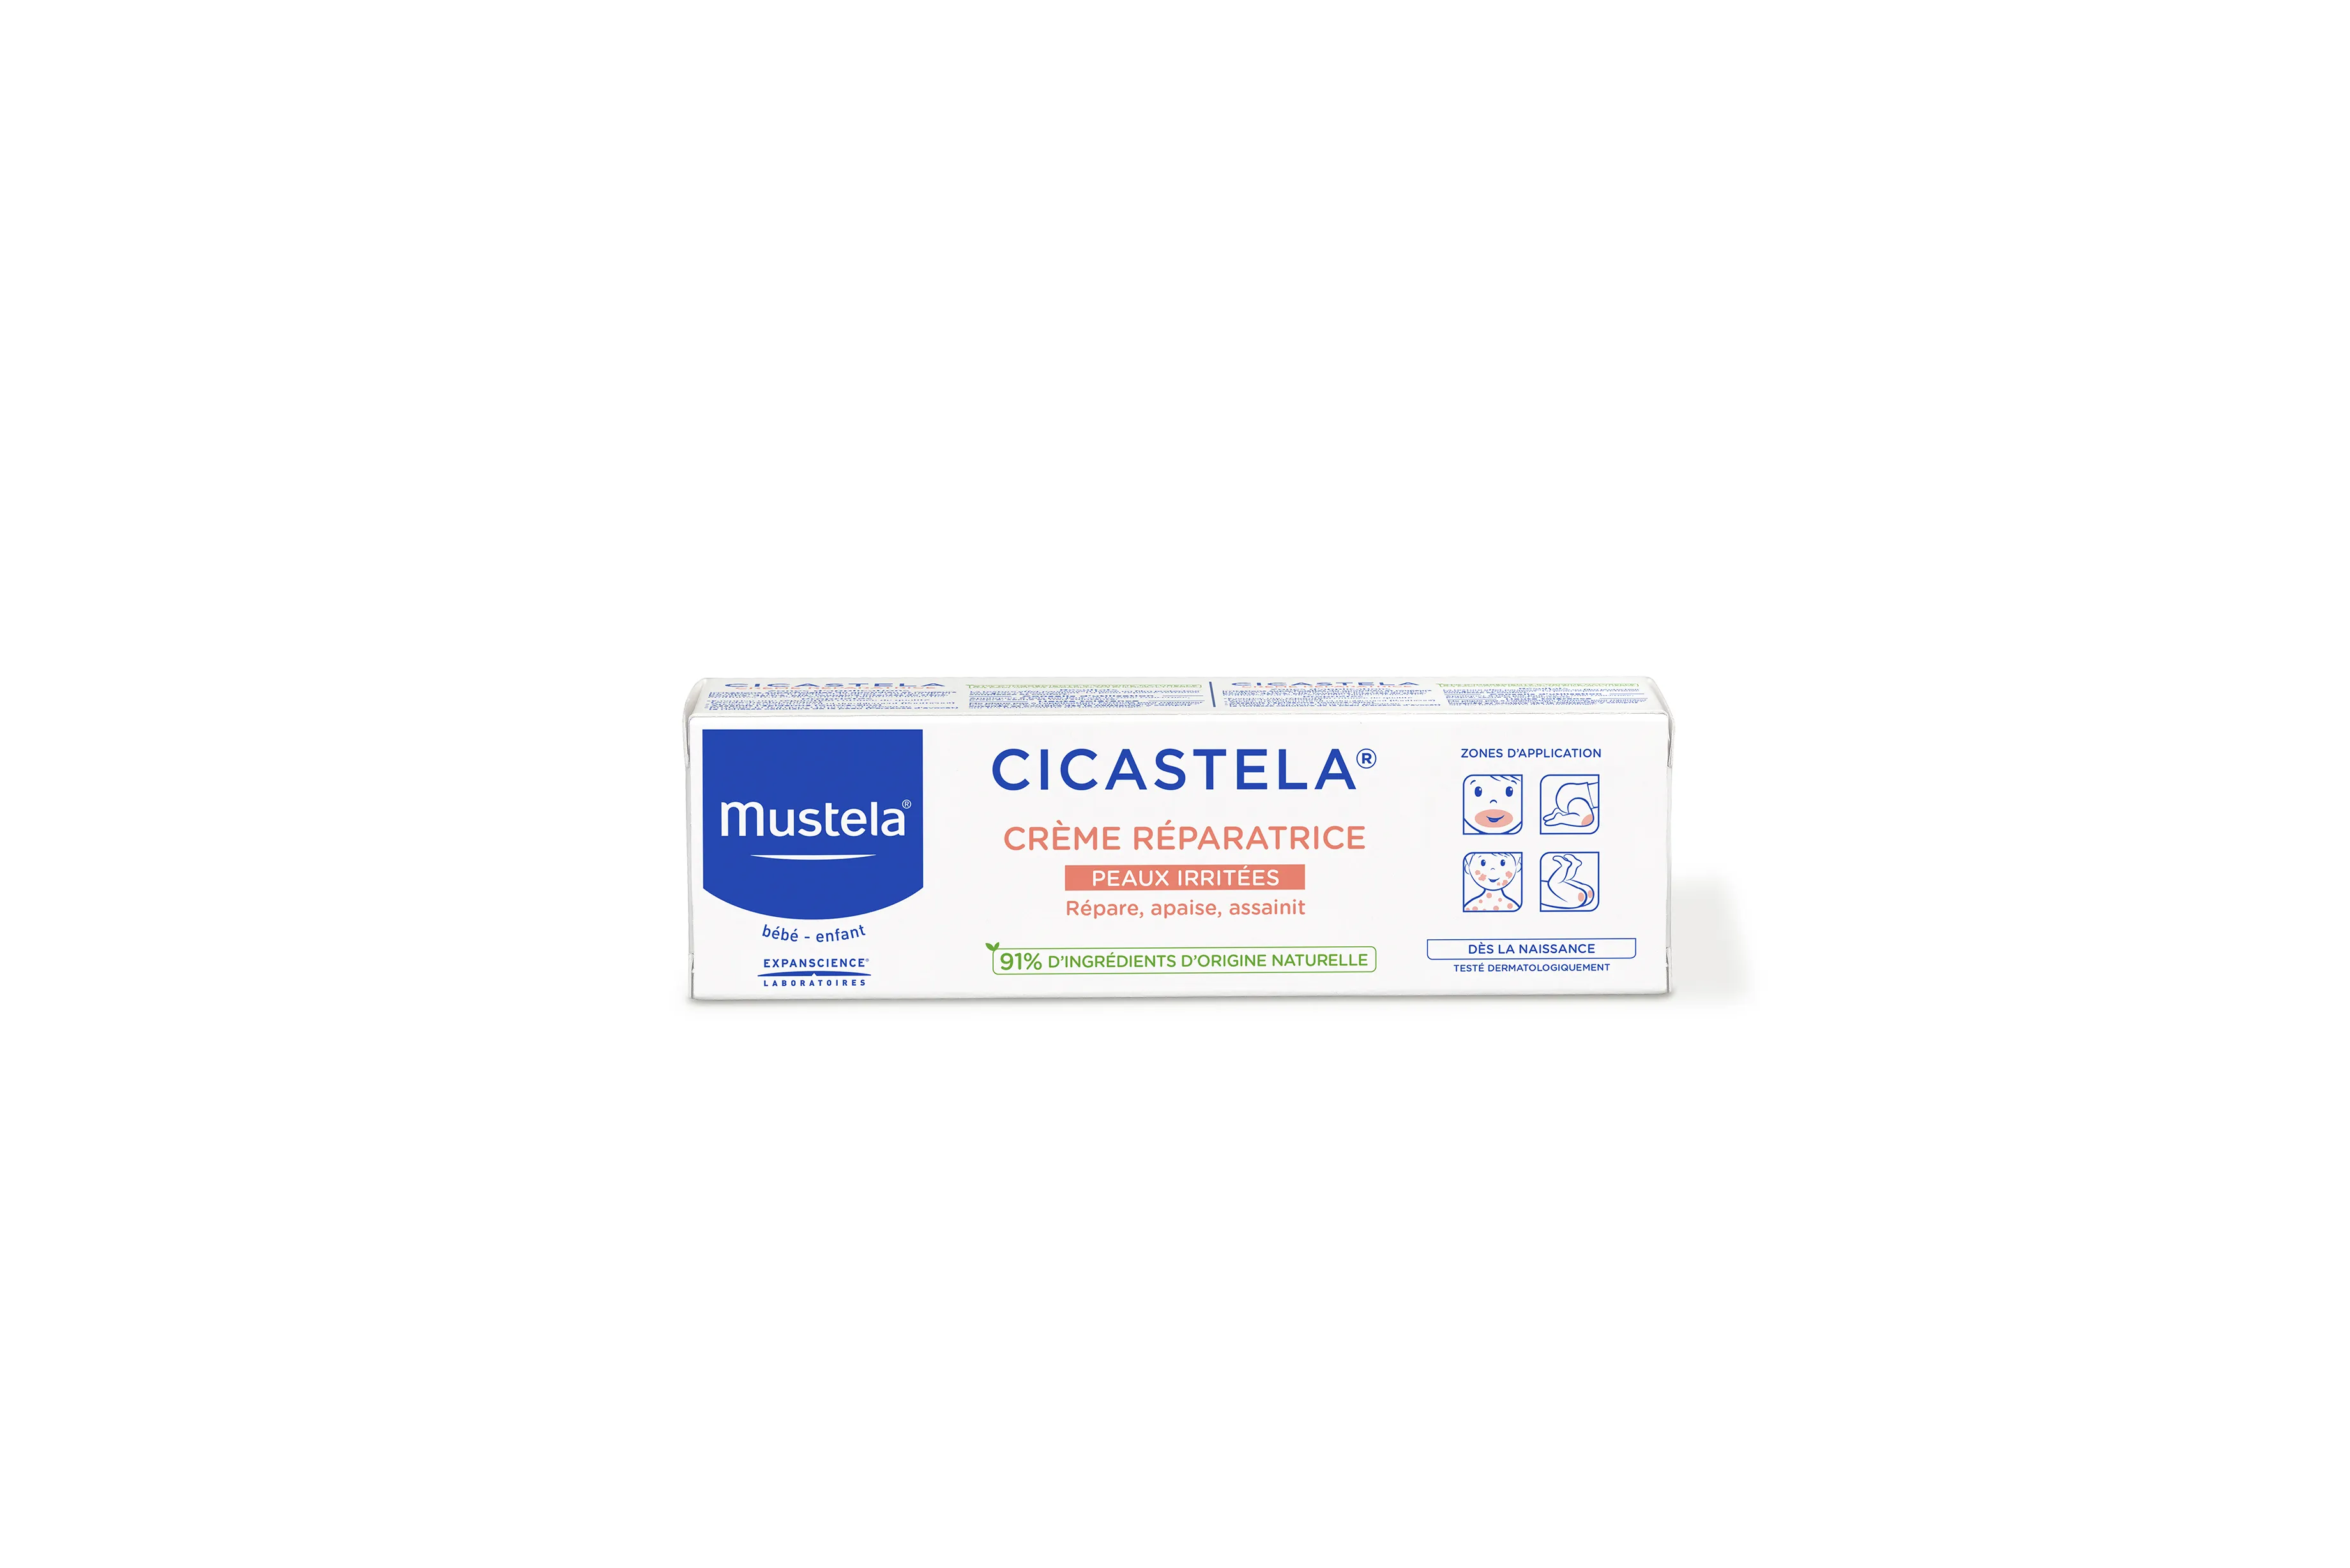 Mustela Cicastela, krem regeneracyjny, 40 ml